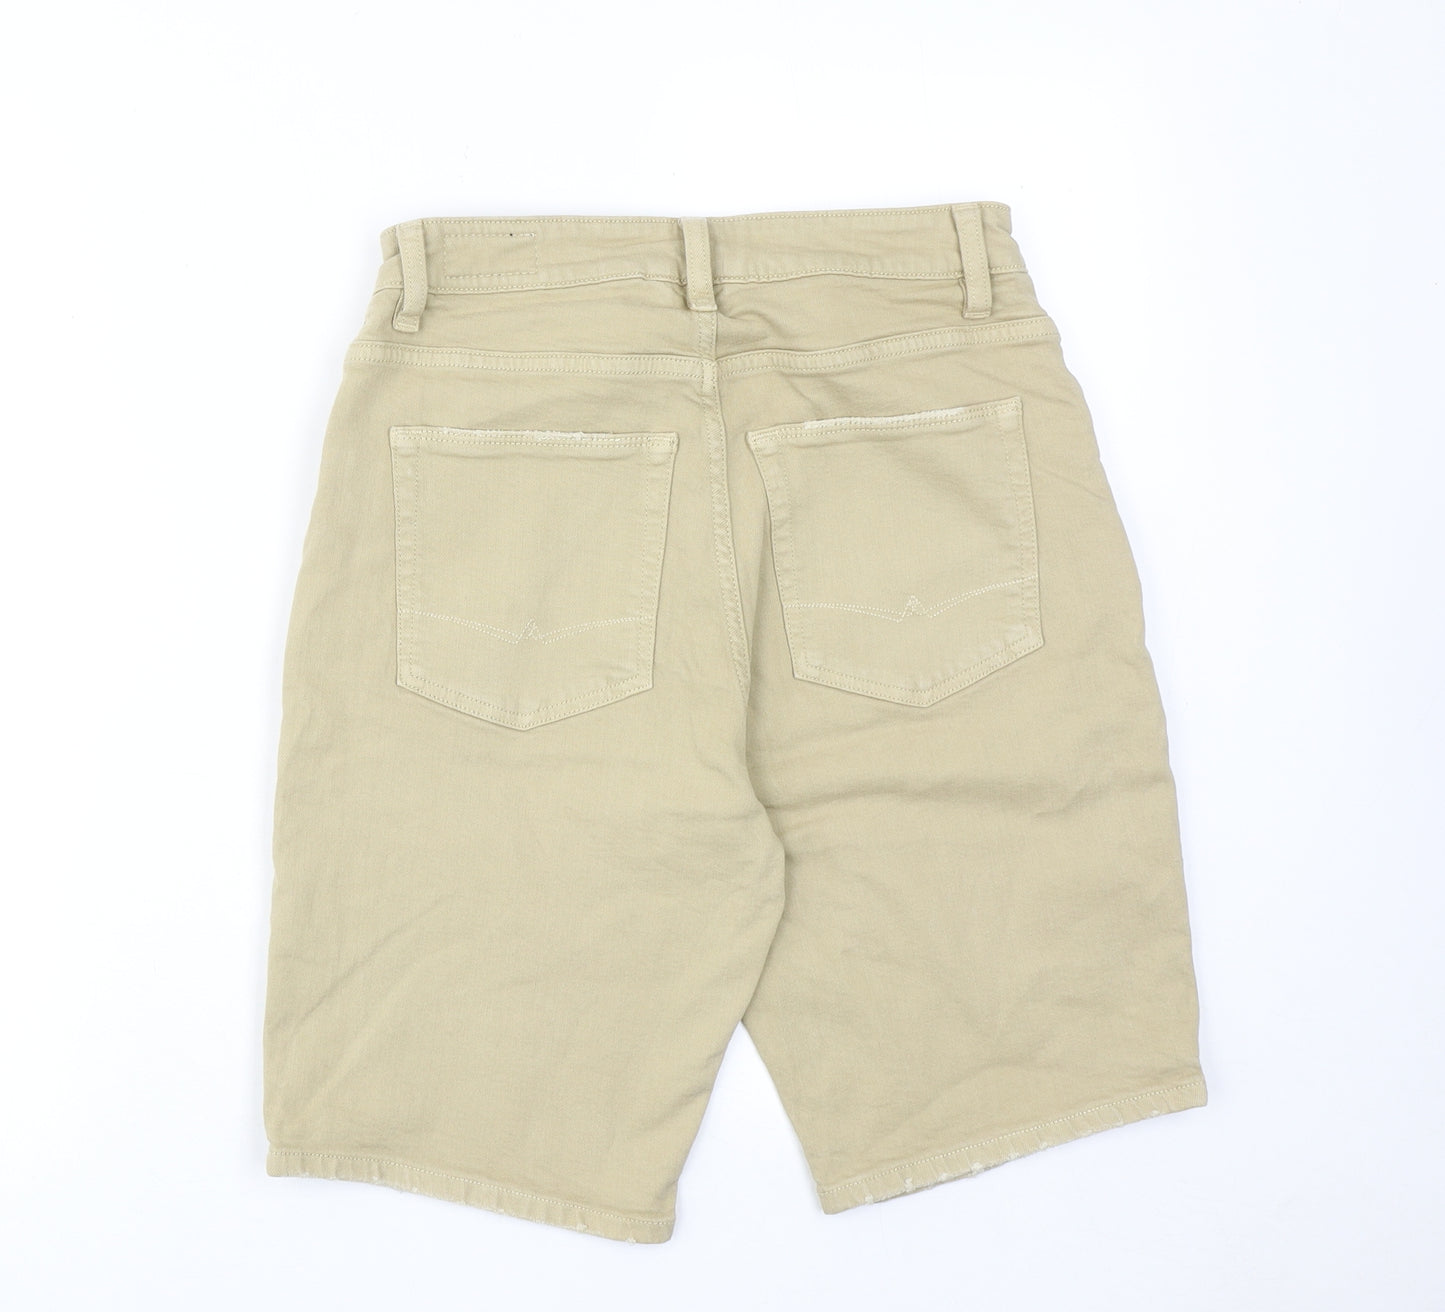 ASOS Mens Beige Cotton Chino Shorts Size 30 in Regular Zip